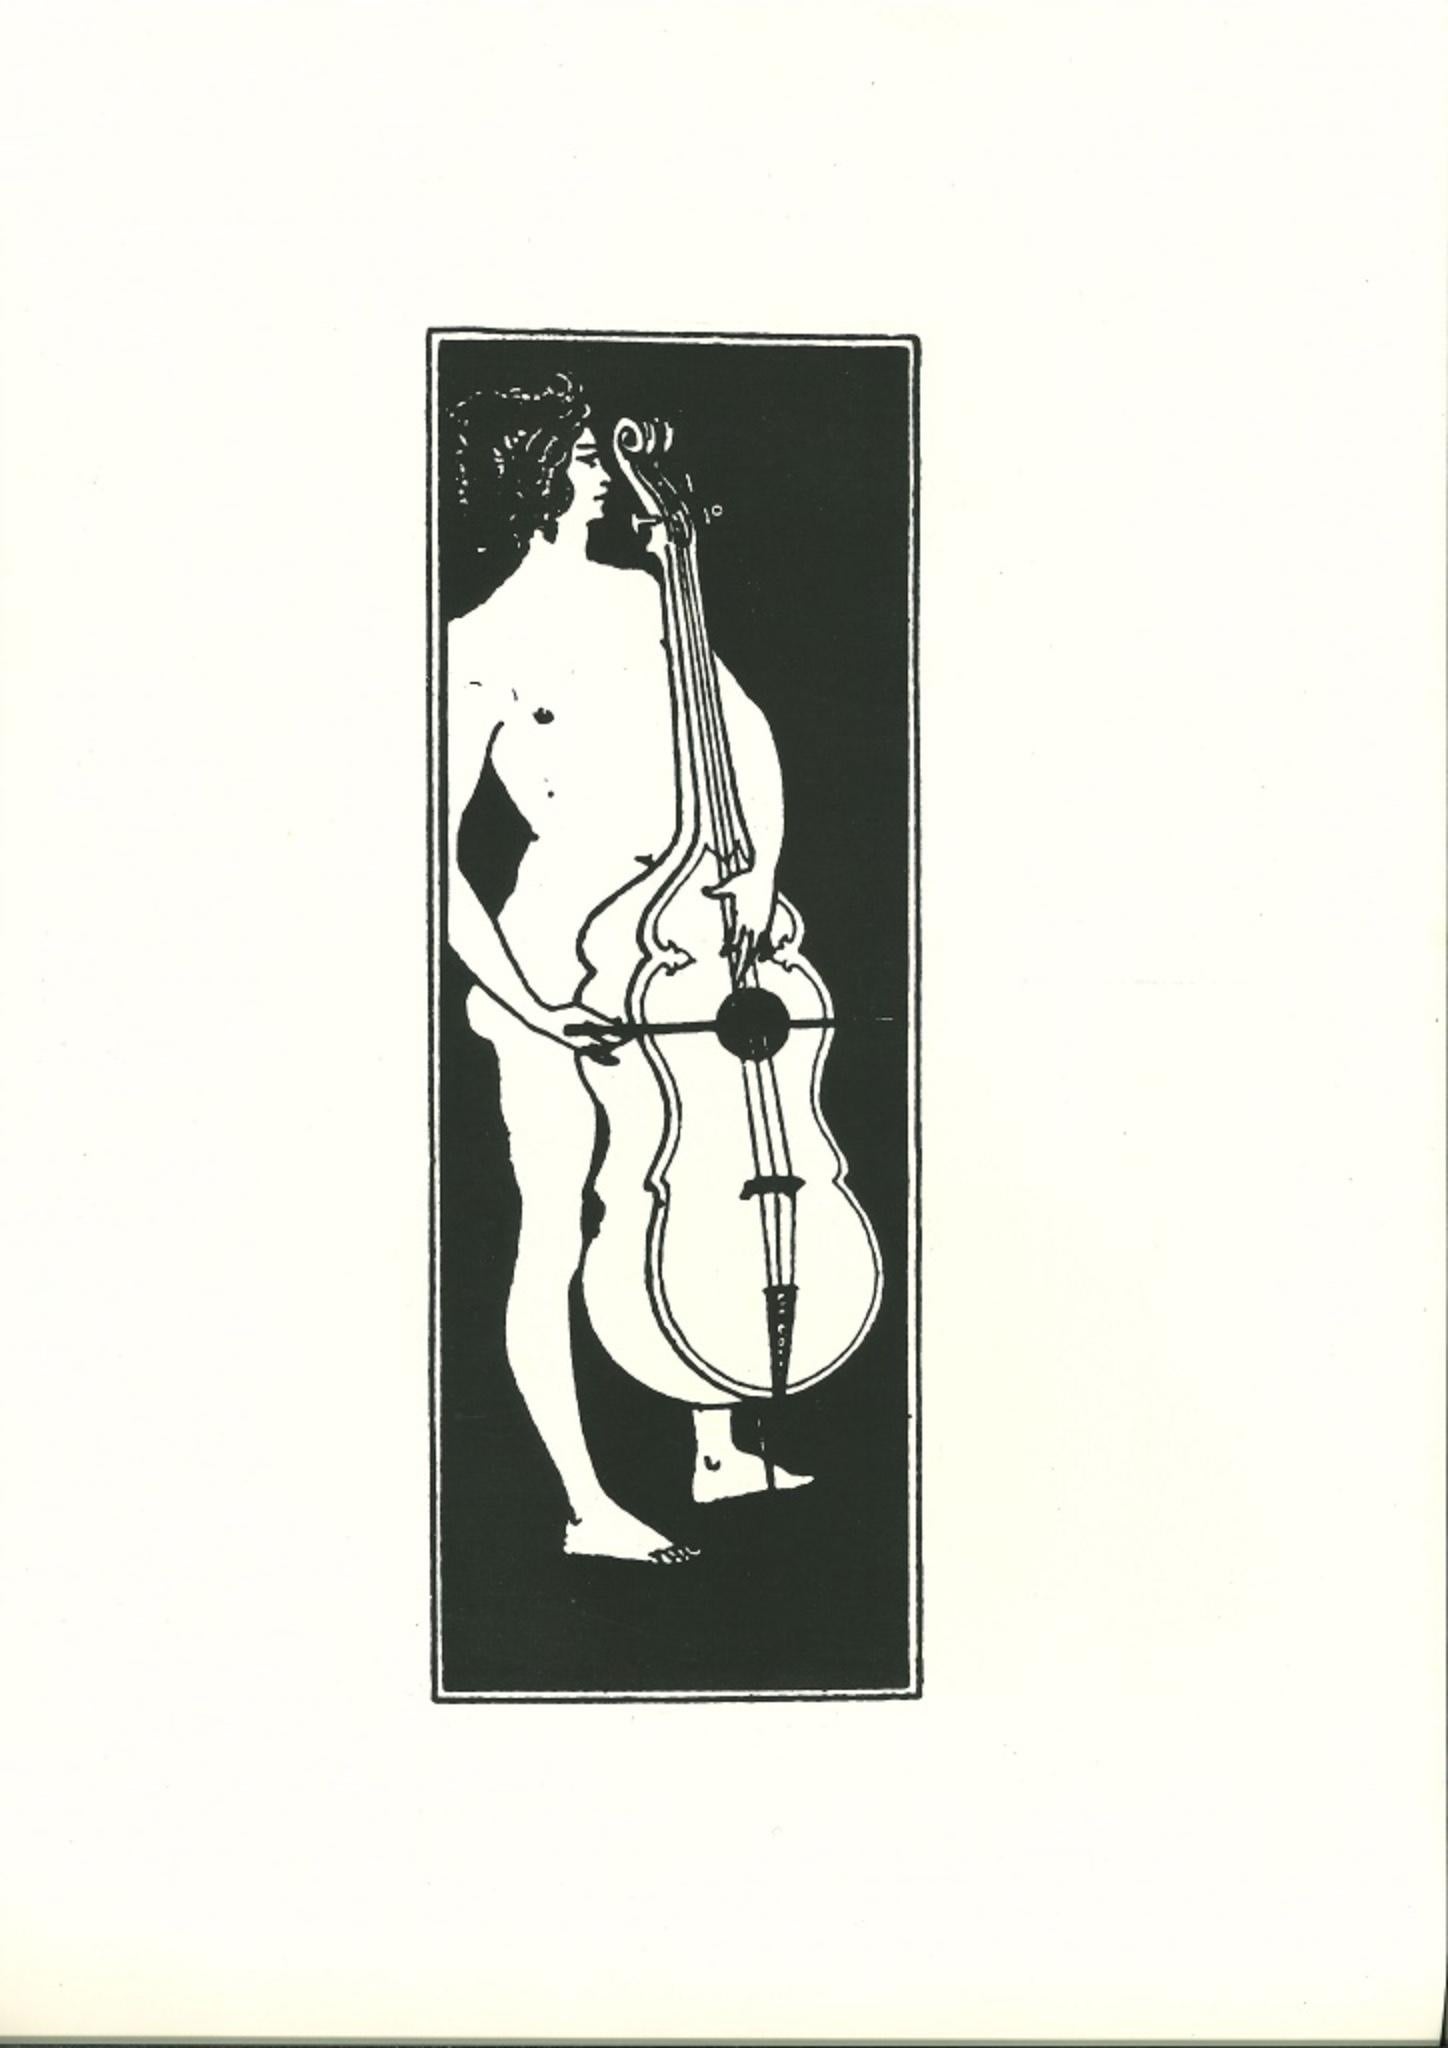 Aubrey Vincent Beardsley Figurative Print - The Man at the Cello - Original Lithograph after Aubrey Beardsley - 1970